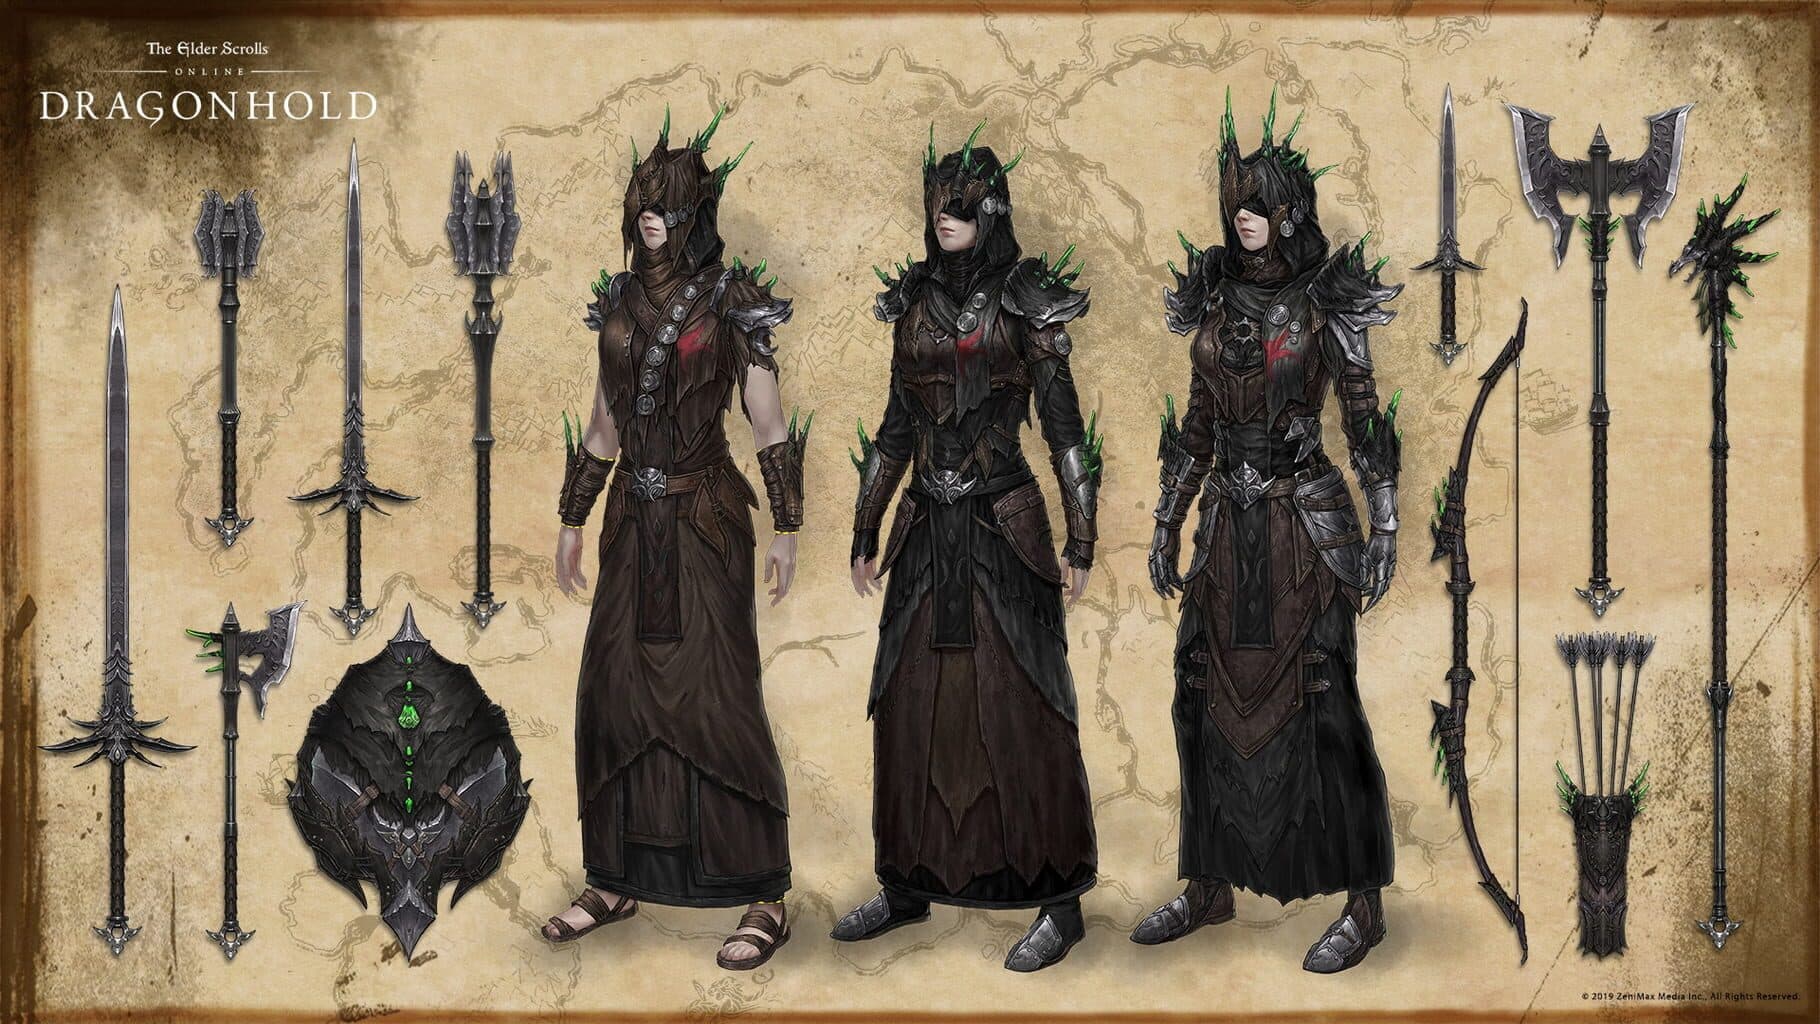 The Elder Scrolls Online: Dragonhold Image